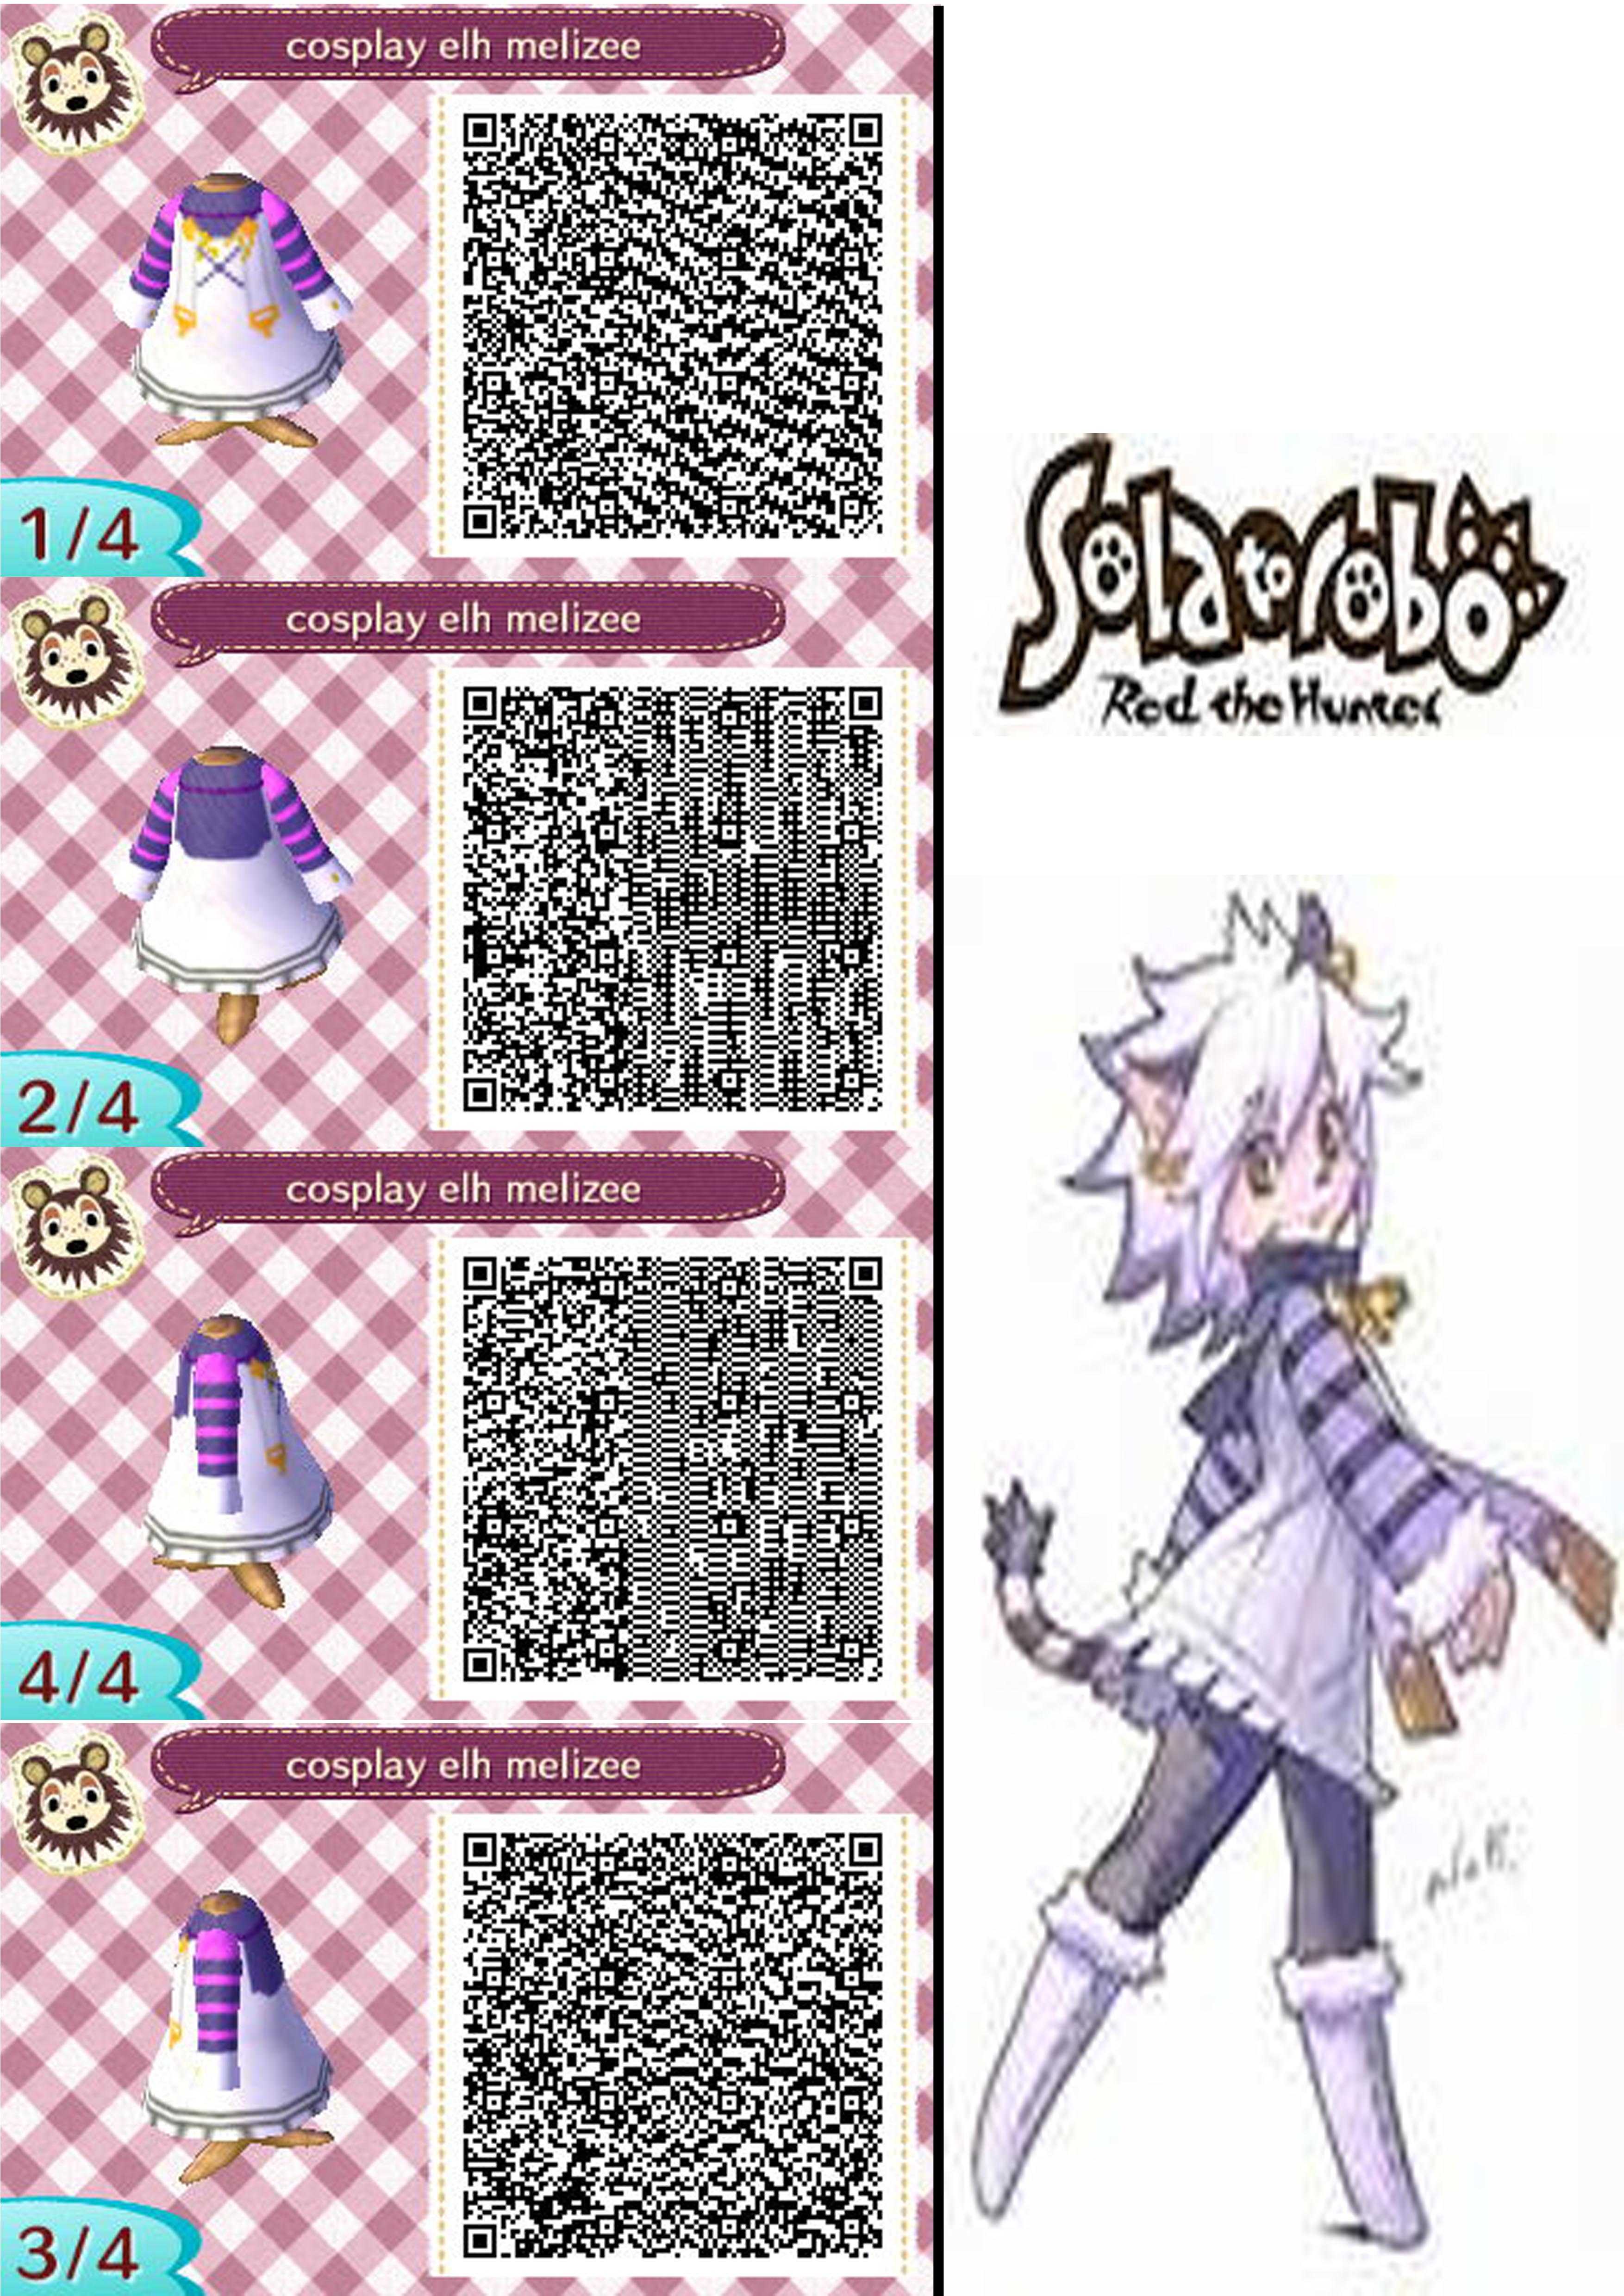 Qr Code Animal Crossing New Leaf Solatorobo Elh